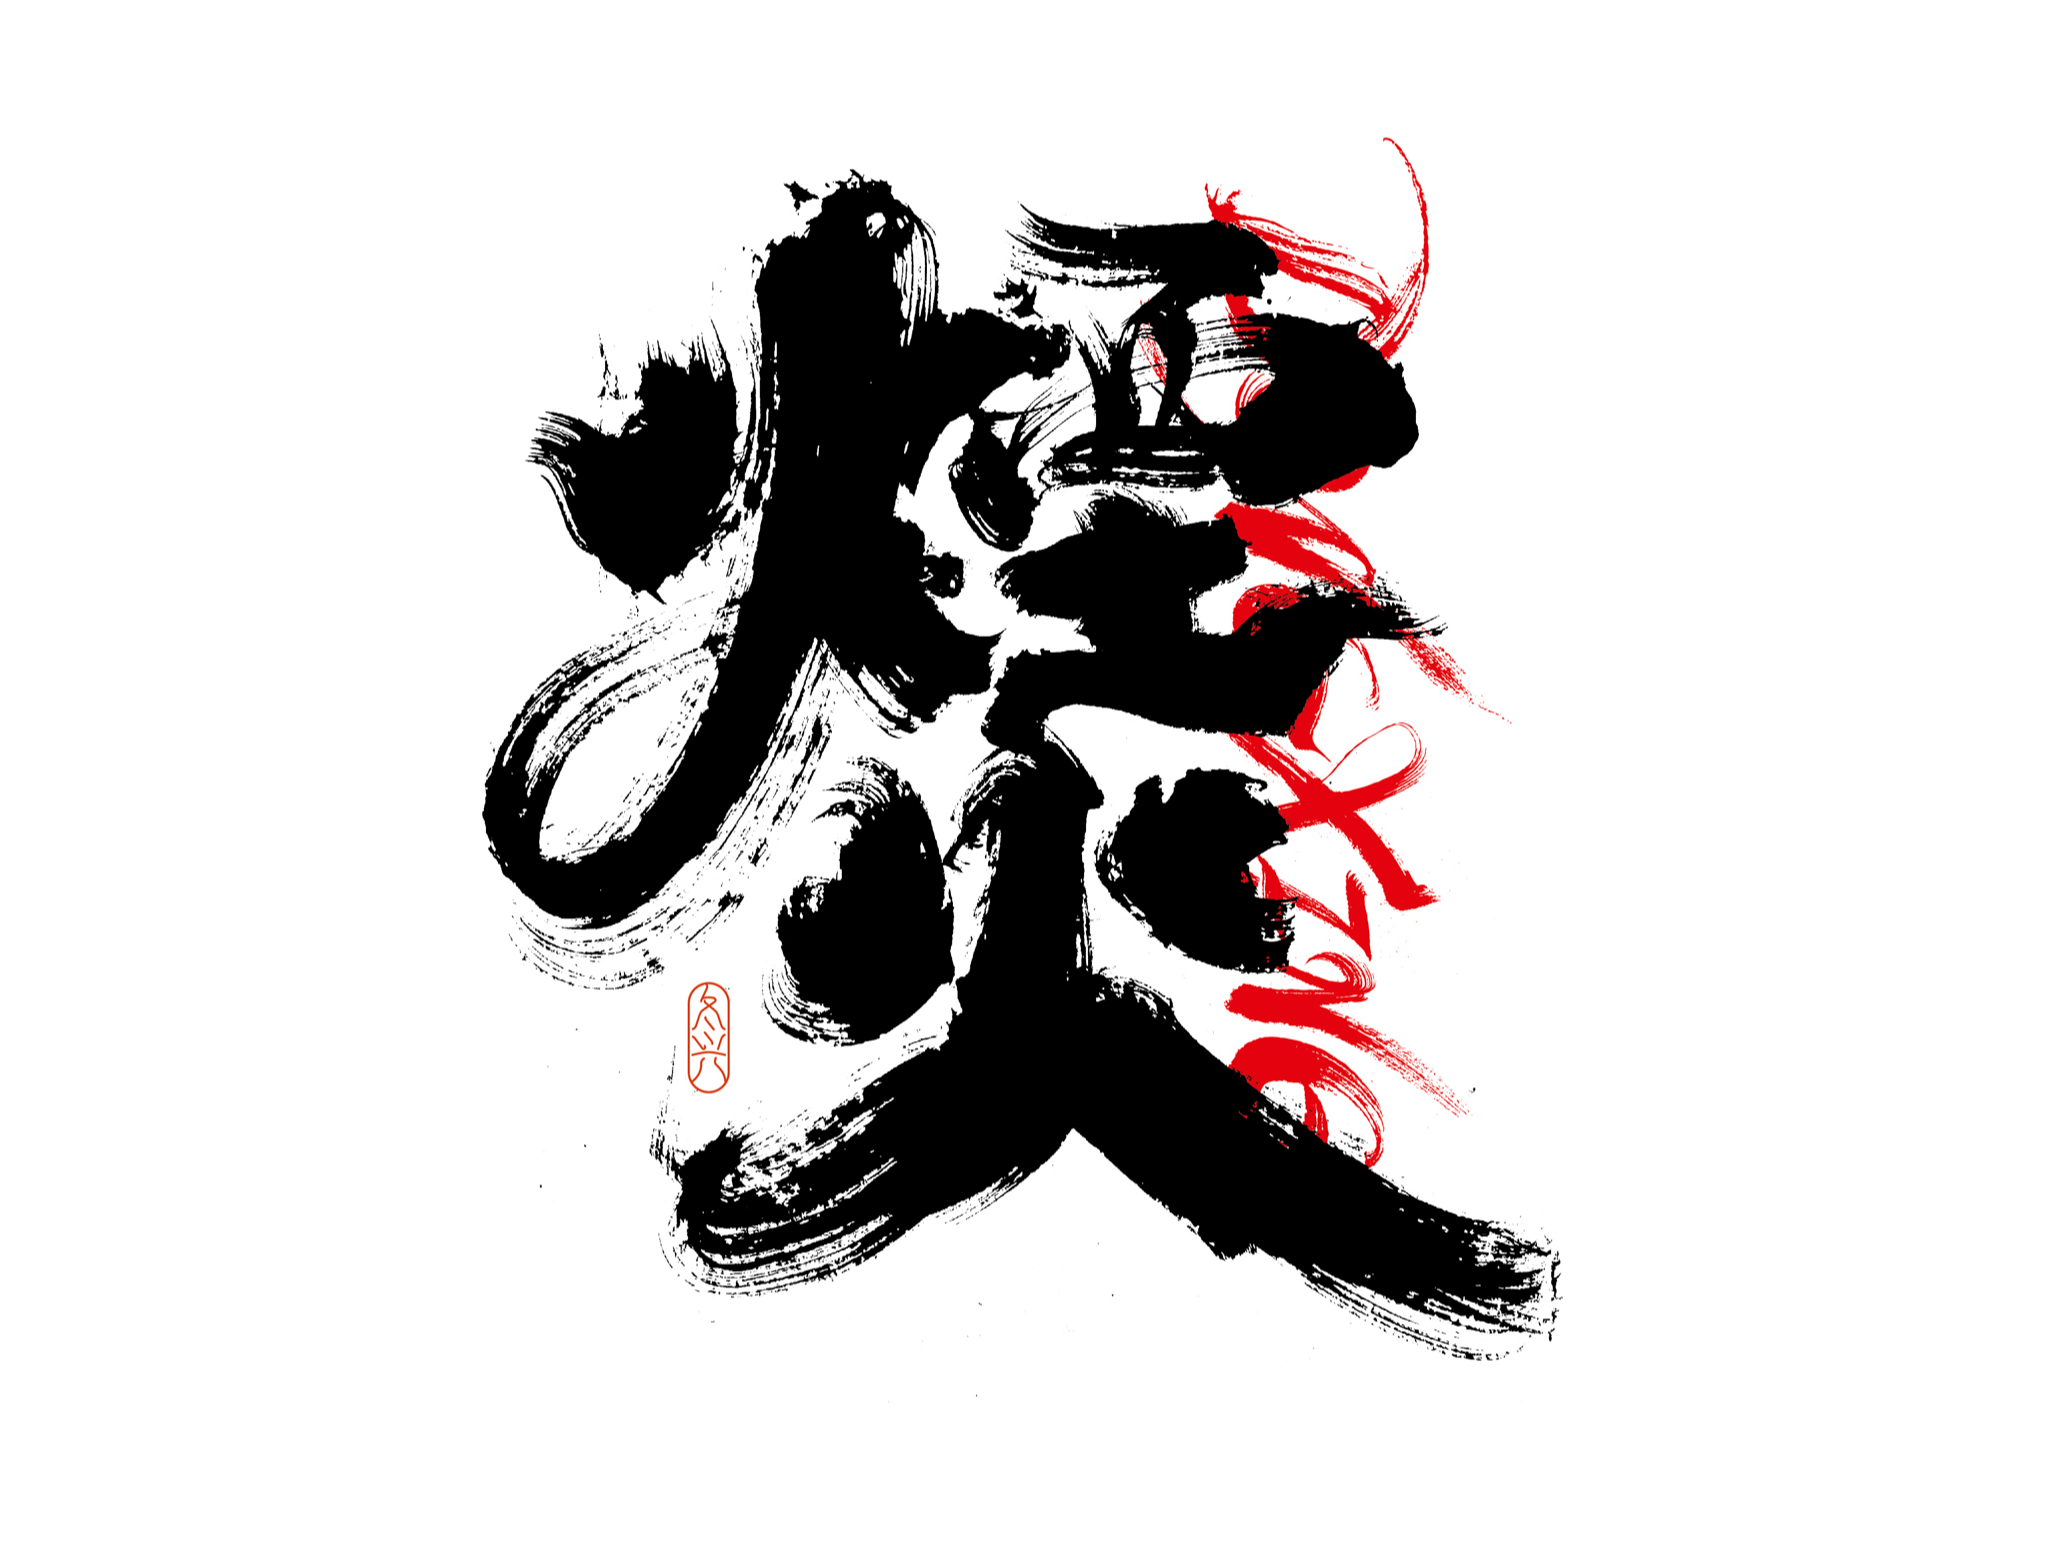 36P Inspiration Chinese font logo design scheme #.753